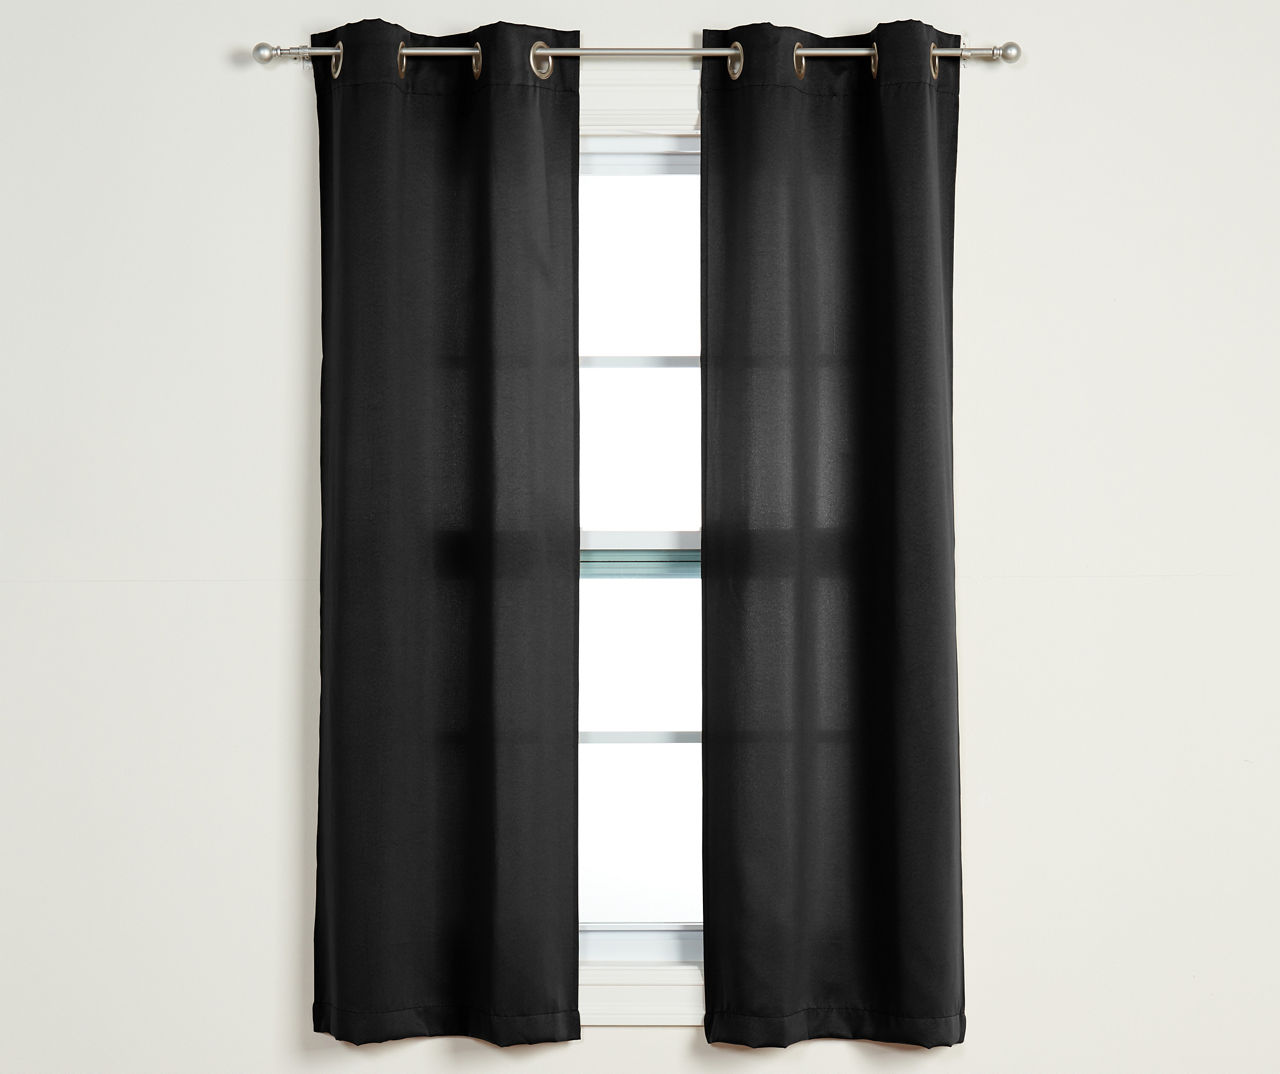 4-Piece Putnam Black Room-Darkening Curtain Panels Set, (63")